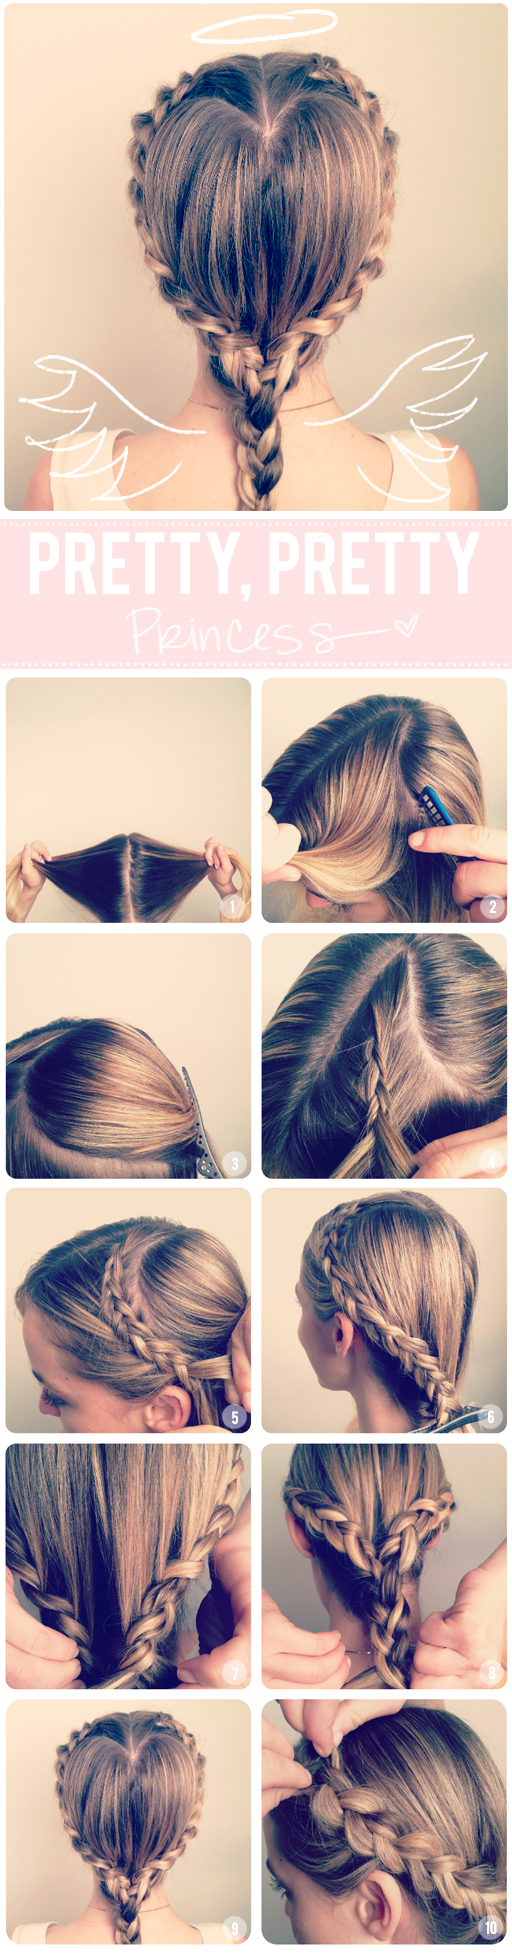 DIY French Fishtail Braid Hairstyle